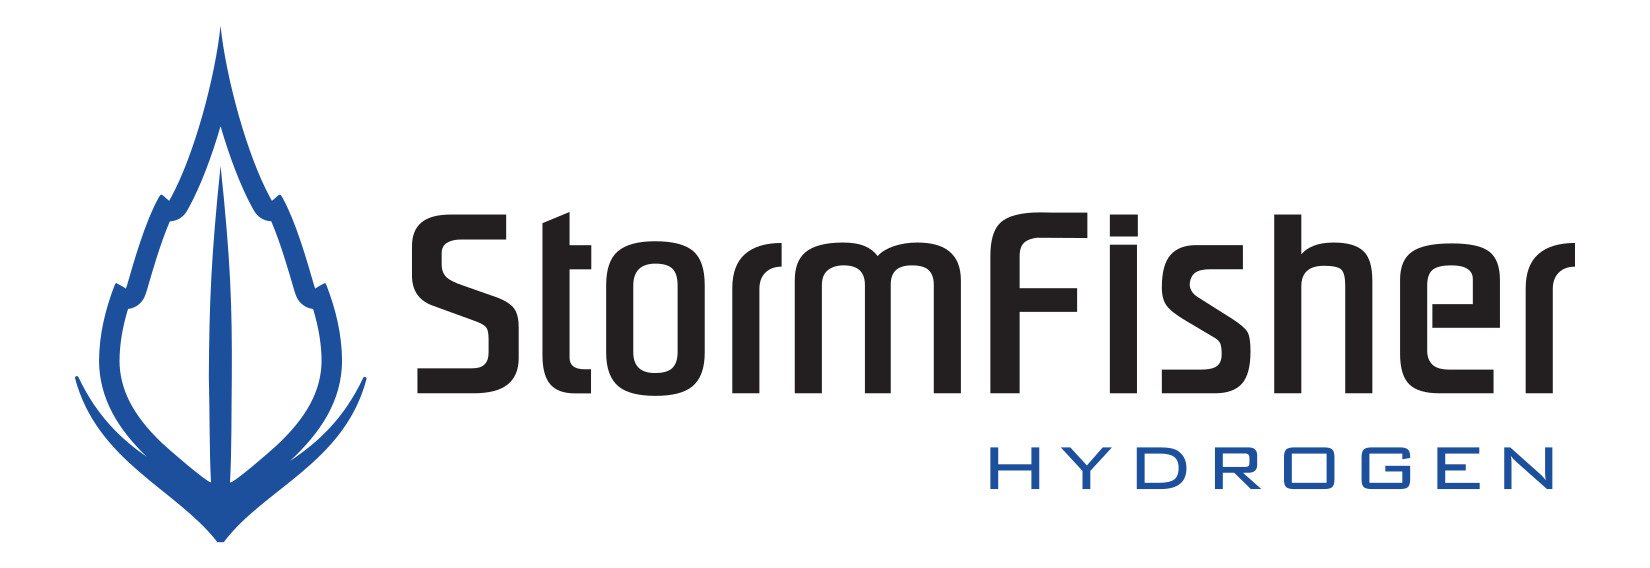 StormFisher-Hydrogen-FINAL-_2_.jpg